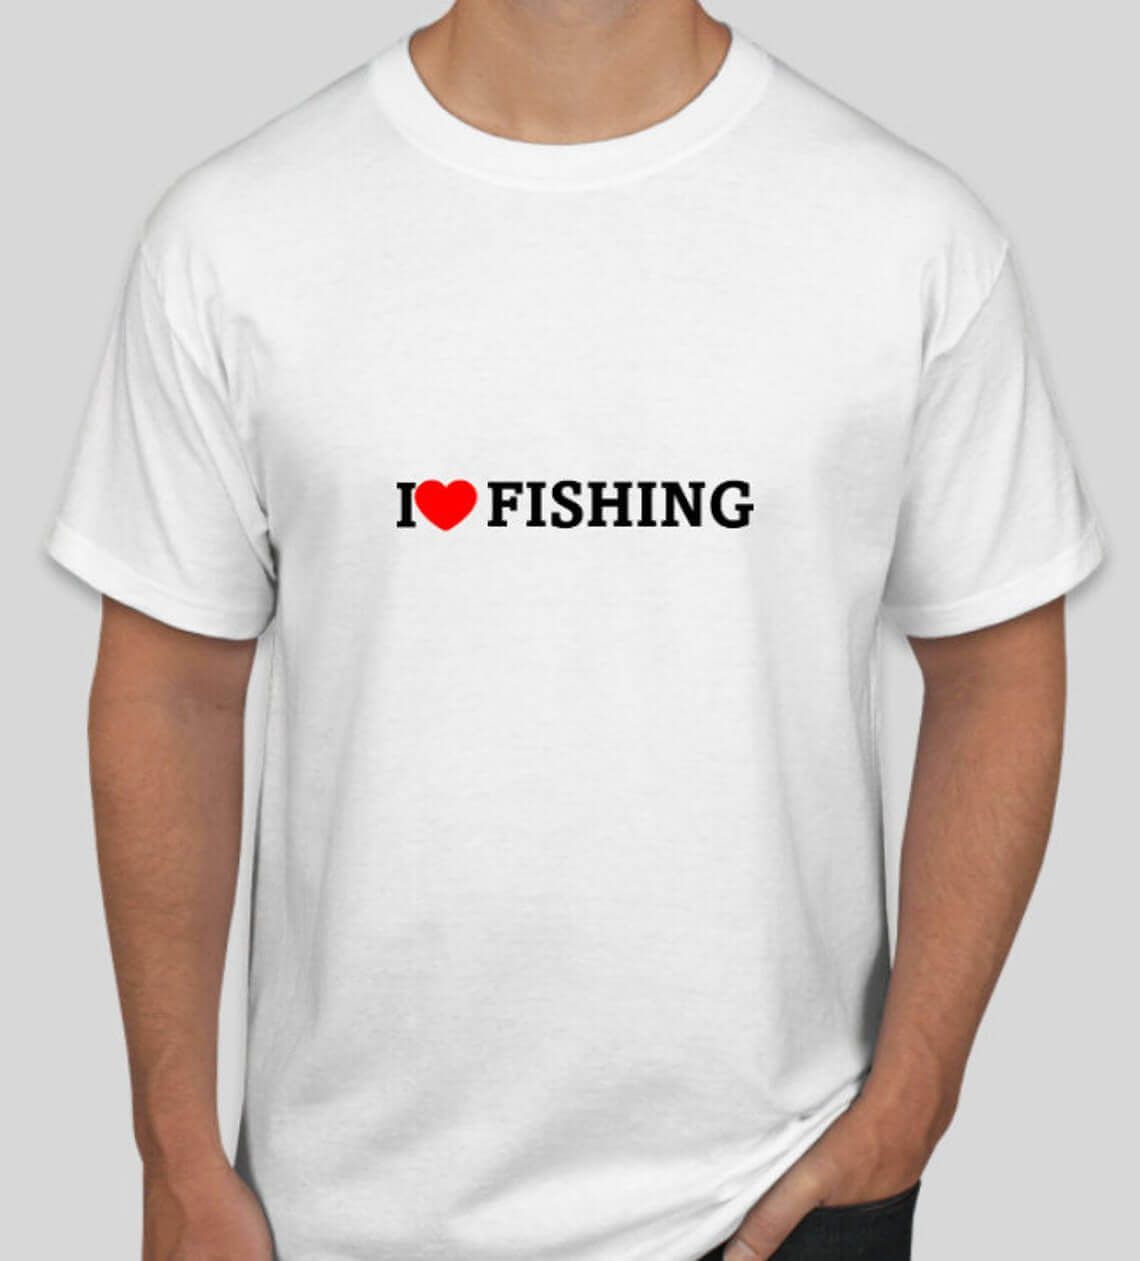 The inscription I love fishing on a T-shirt.